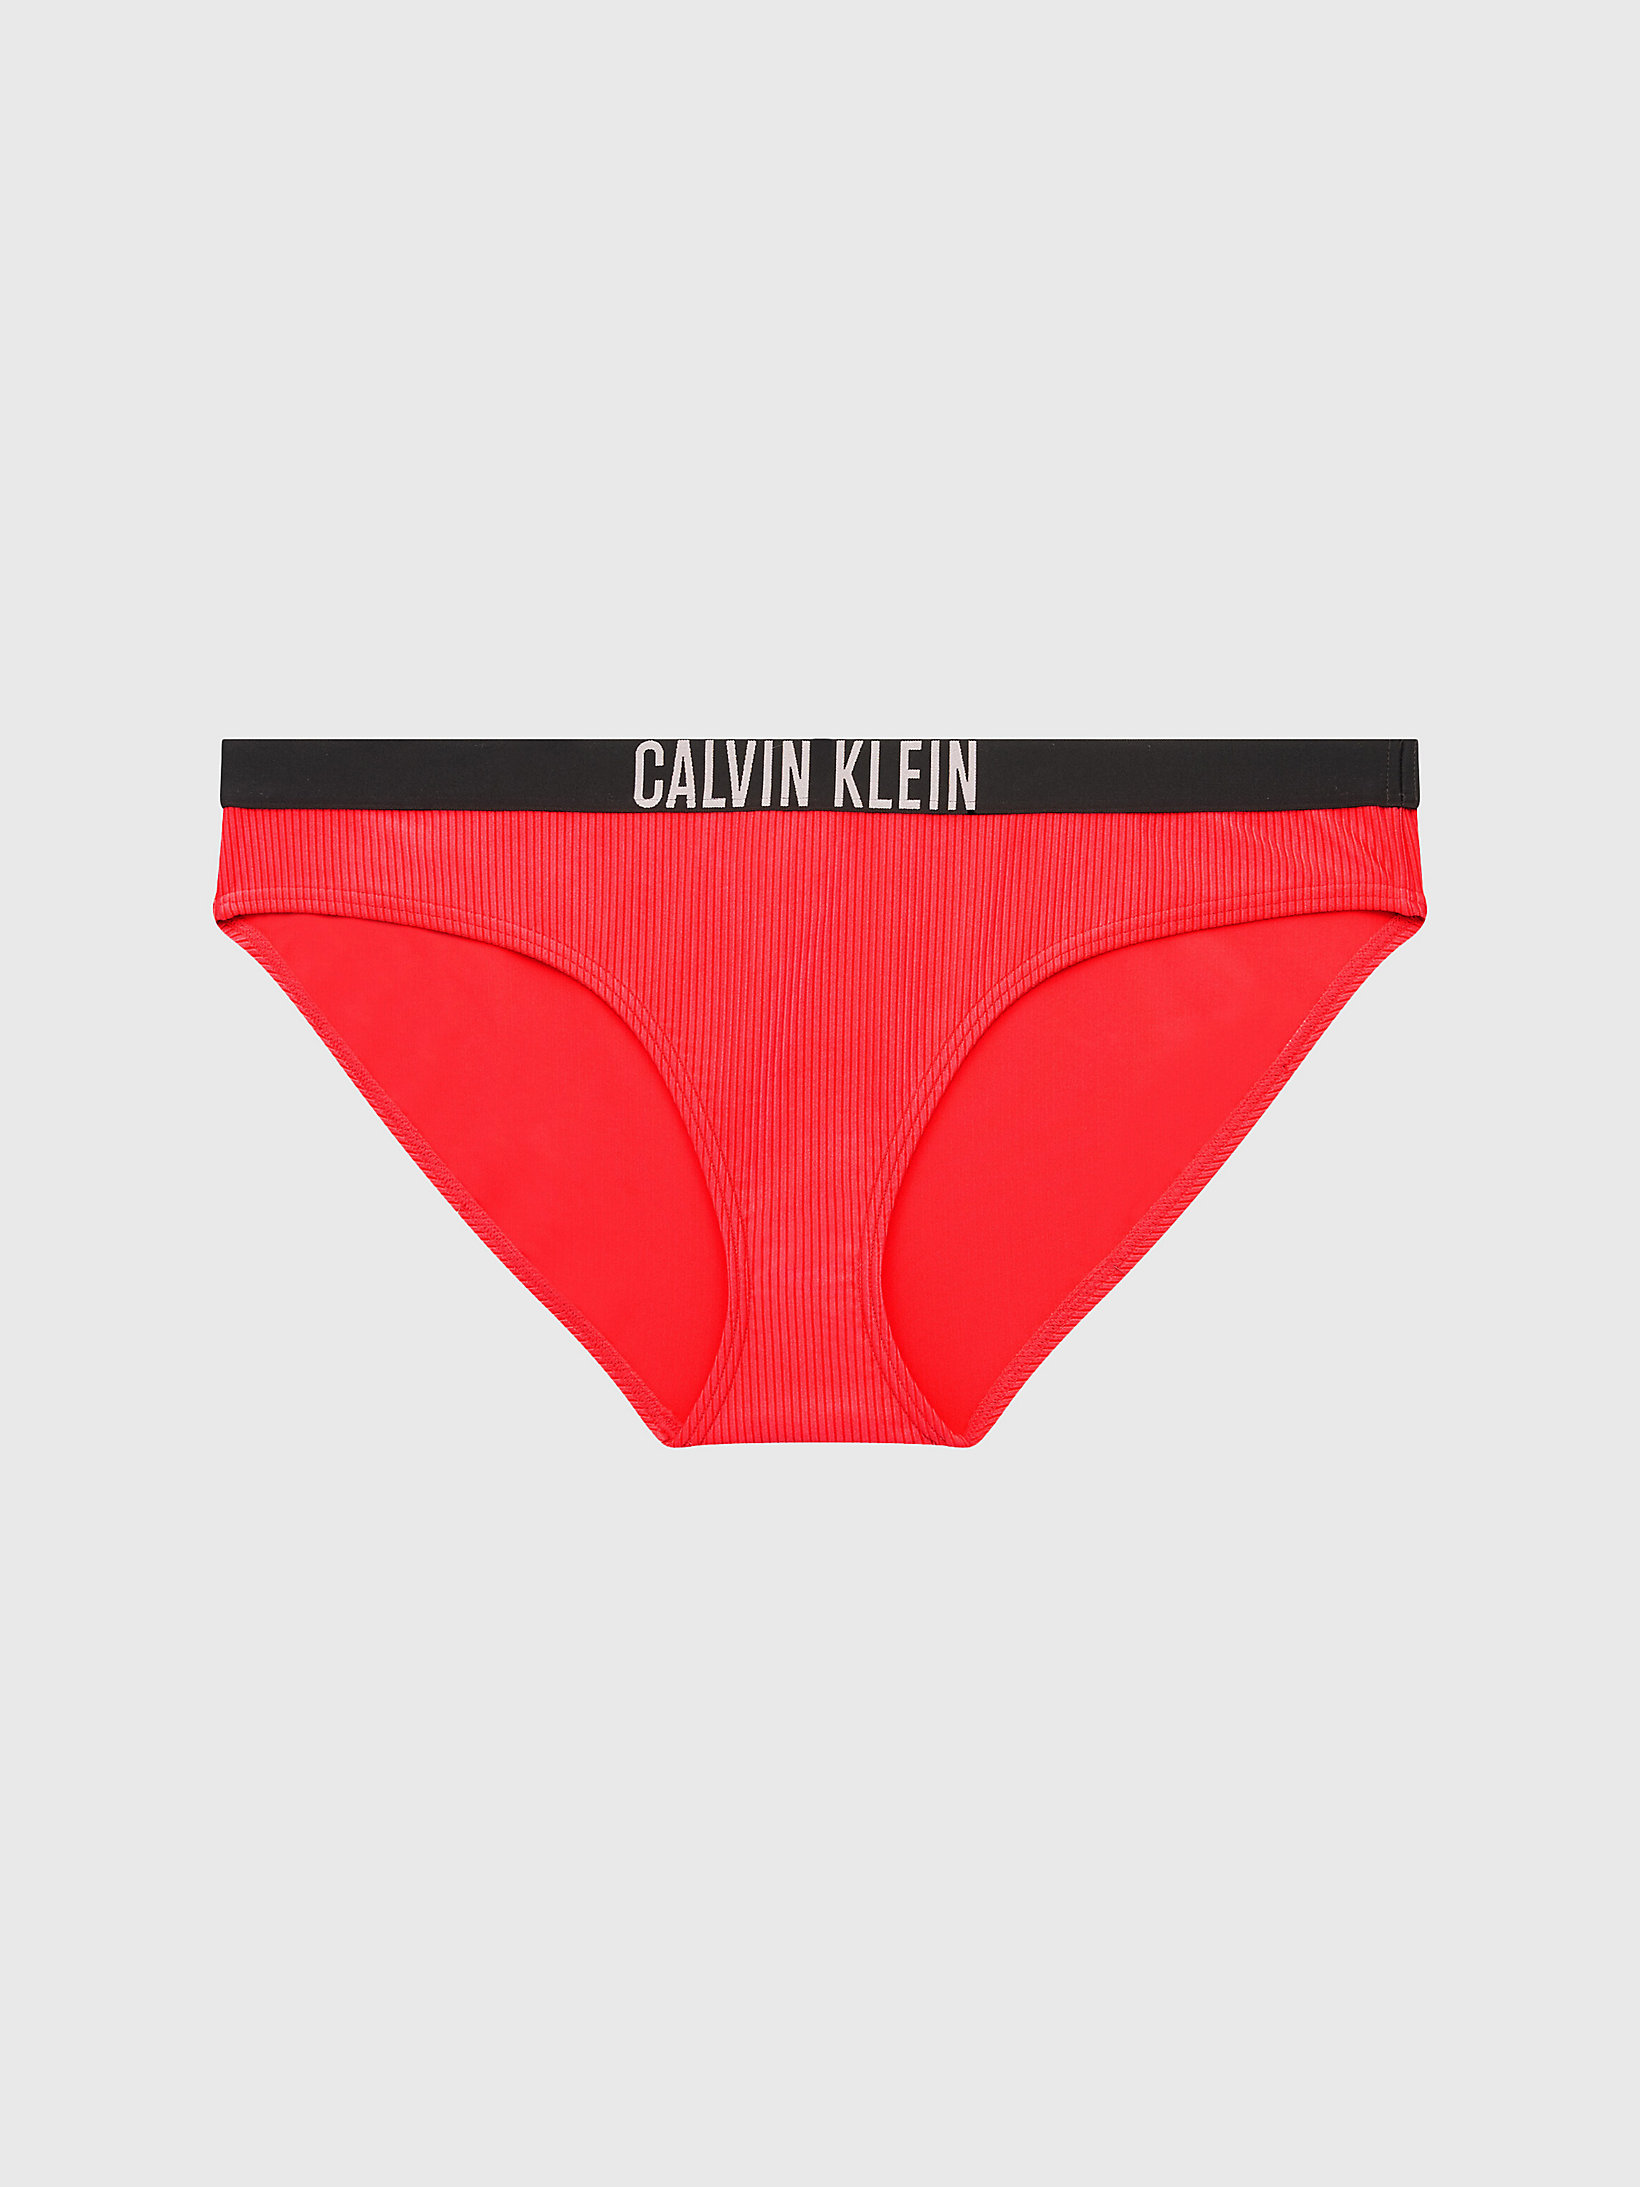 Coral Crush Plus Size Bikini Bottom - Intense Power undefined women Calvin Klein